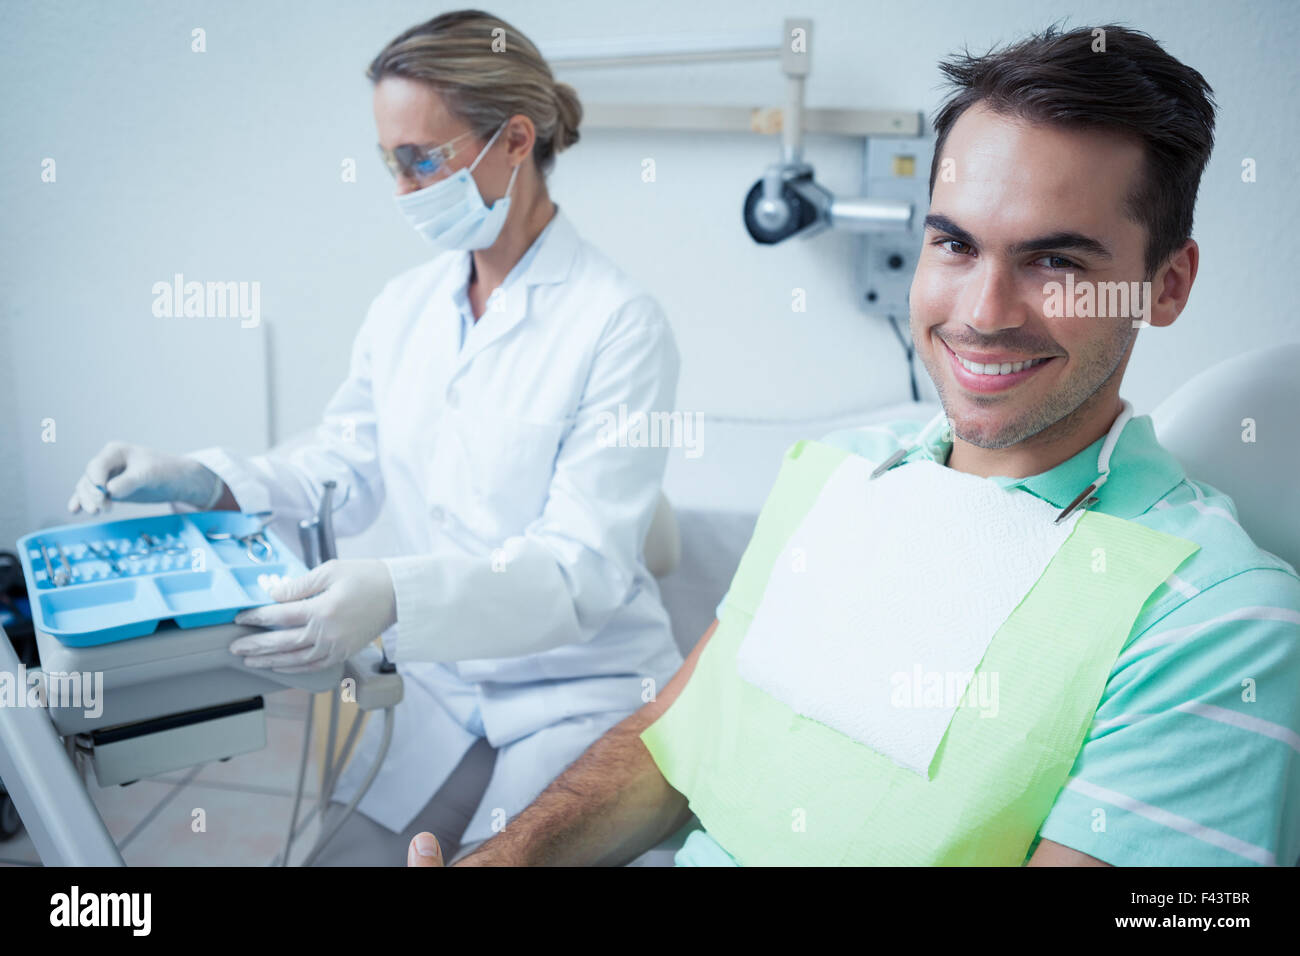 Smiling man waiting for dental exam Stock Photo